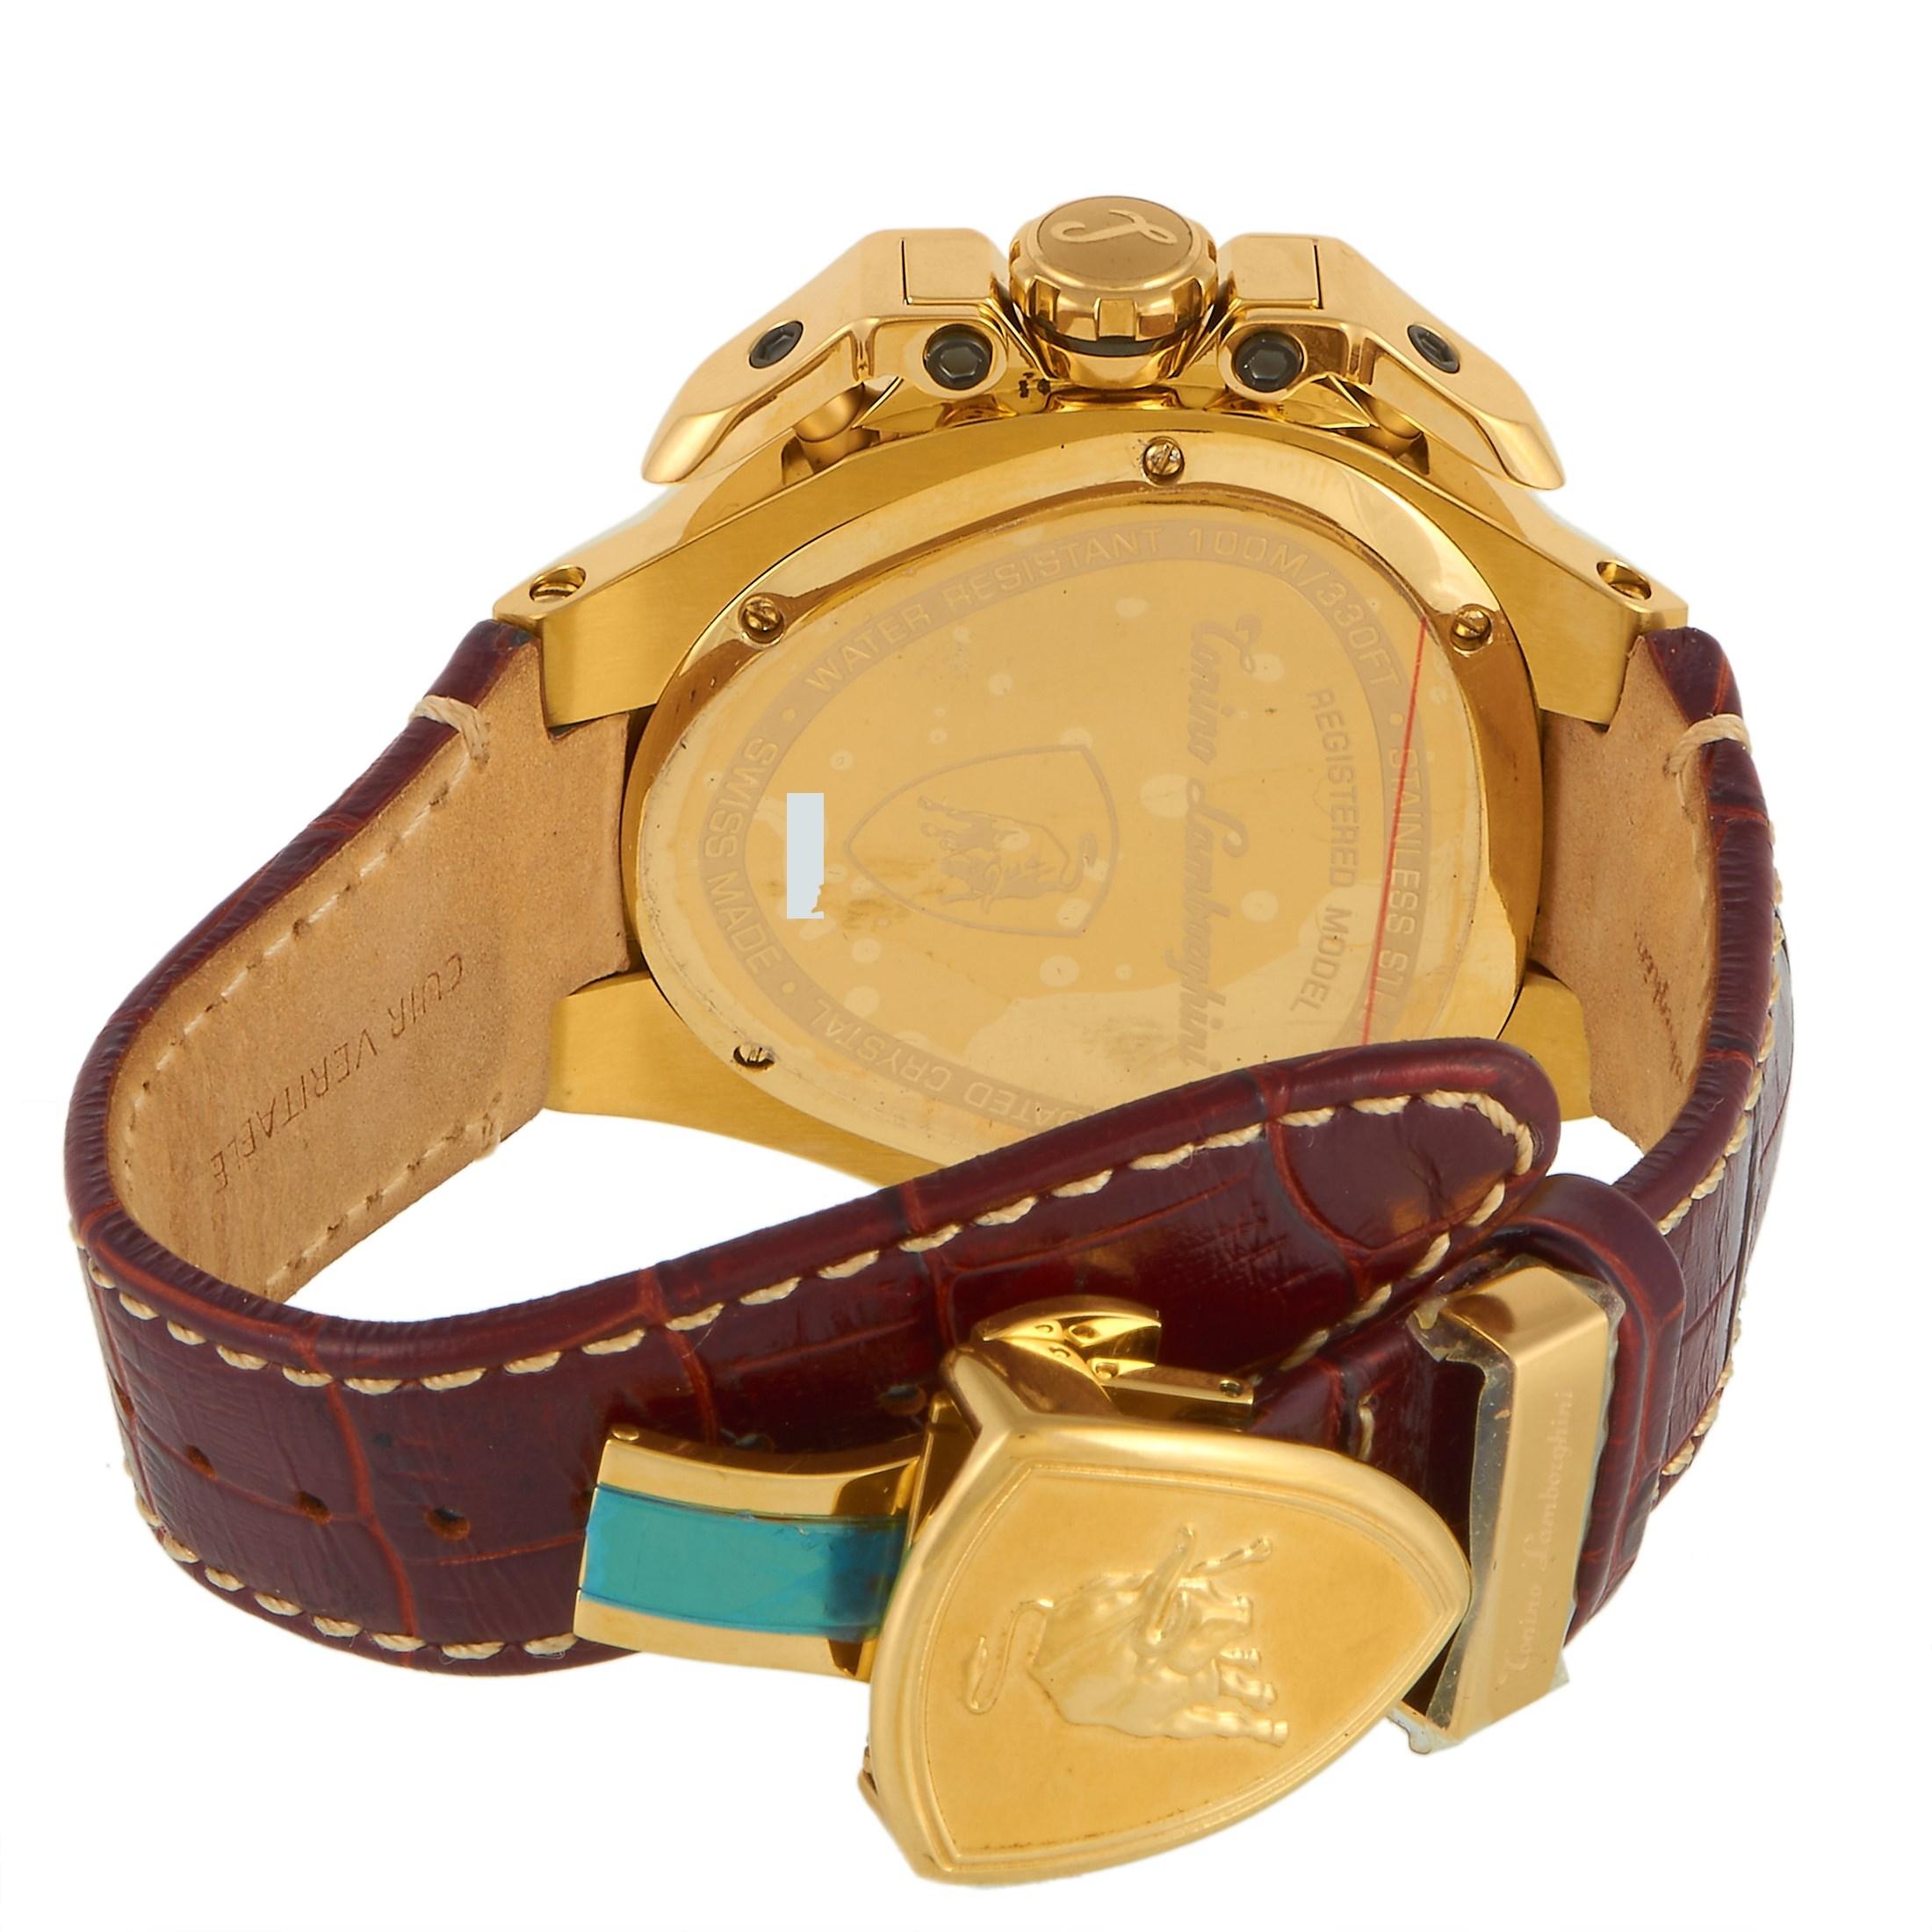 lamborghini wrist watch price